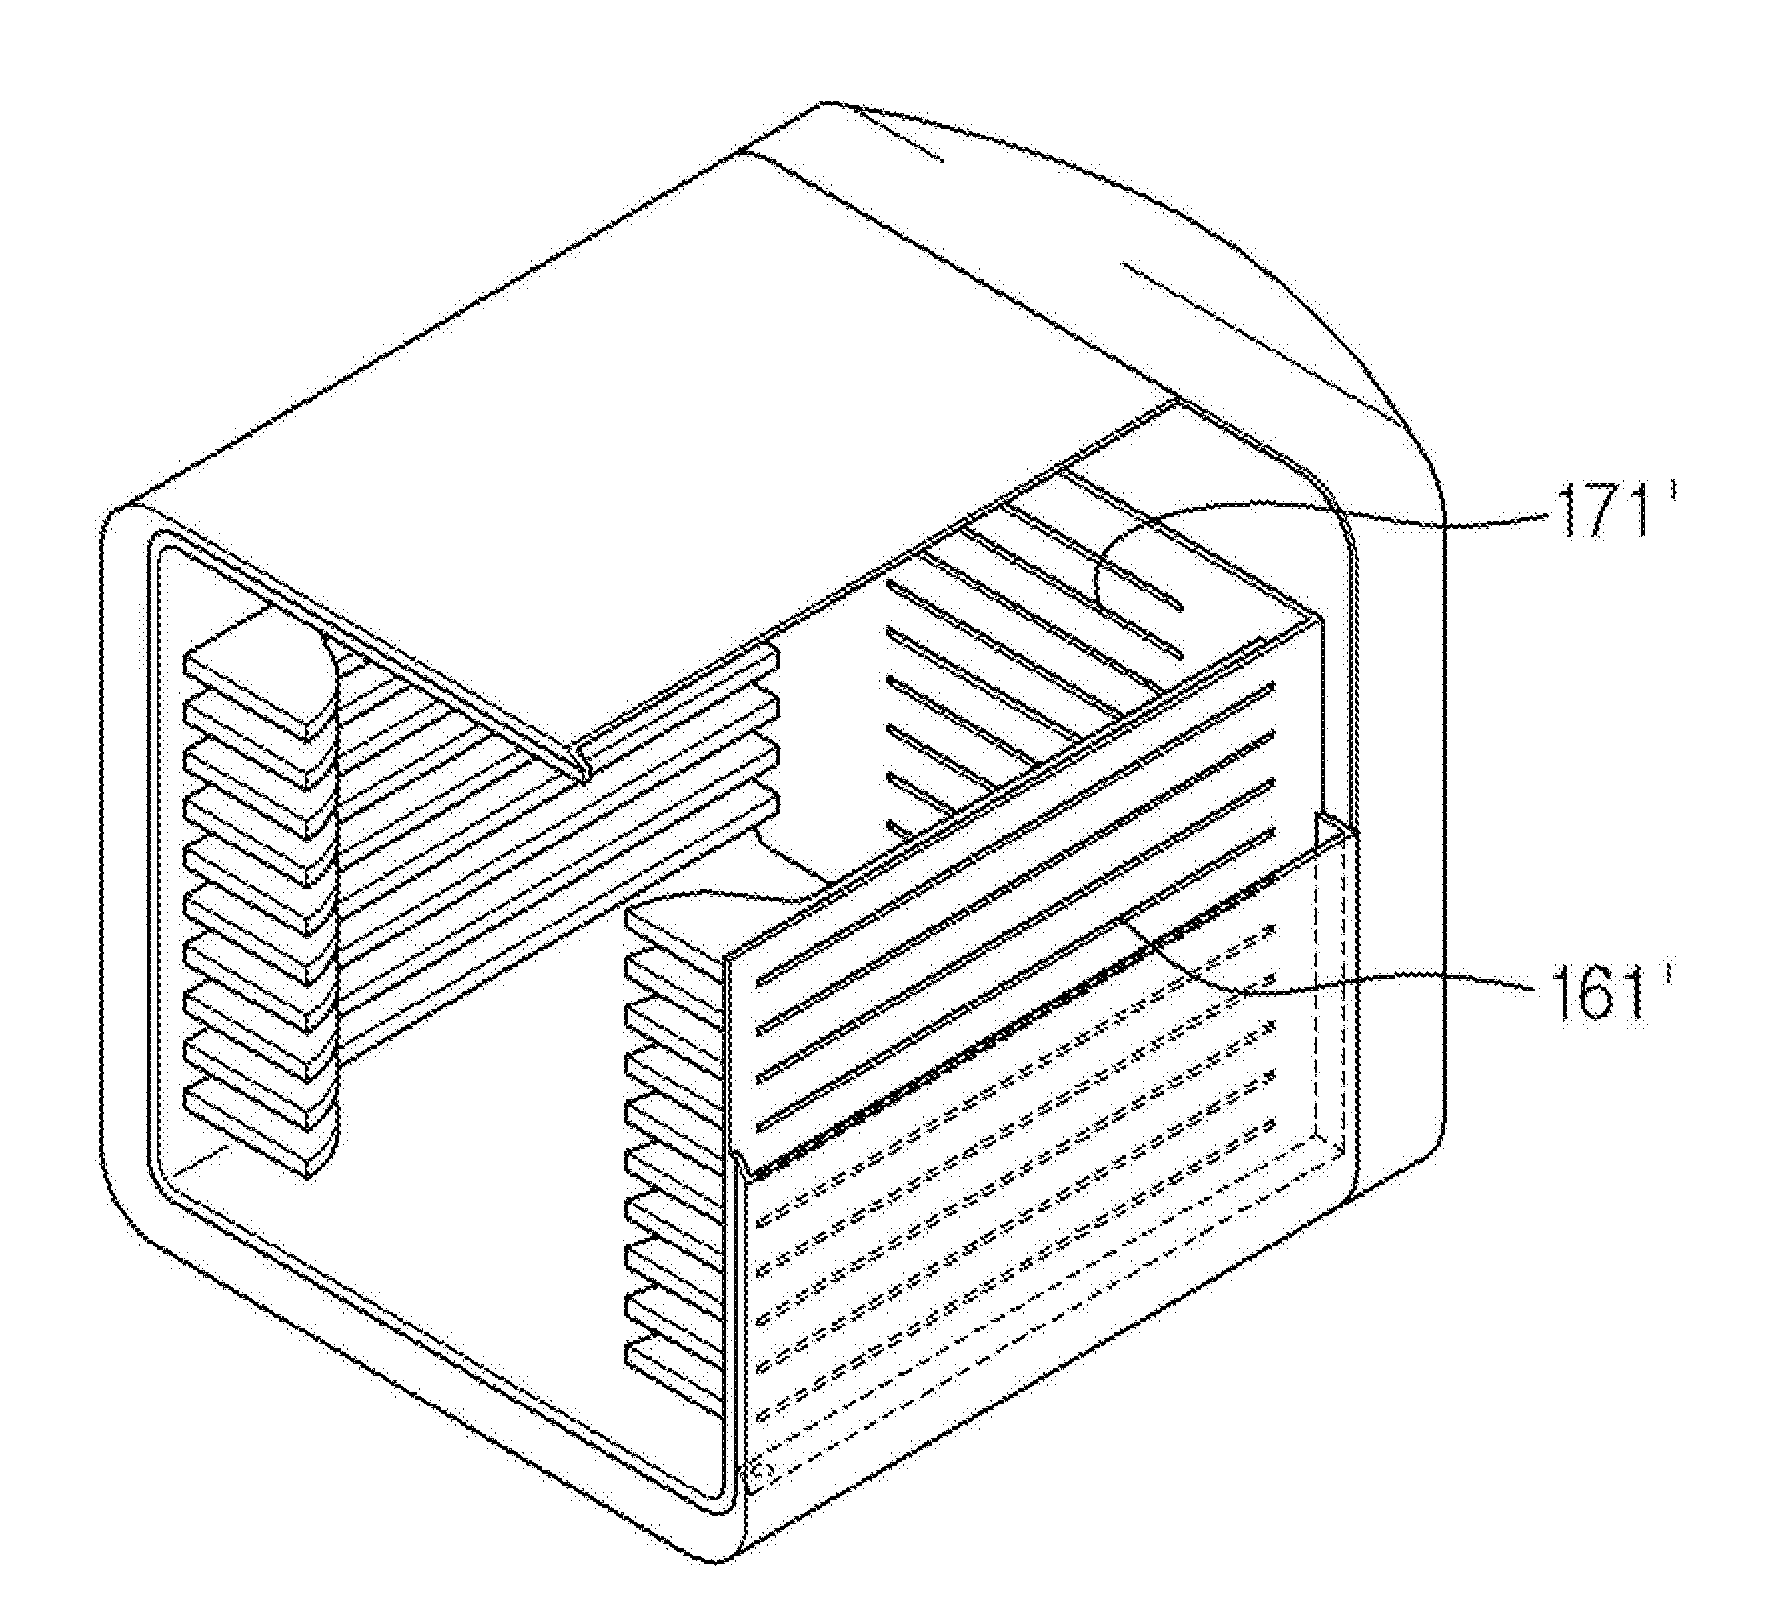 Wafer storage container